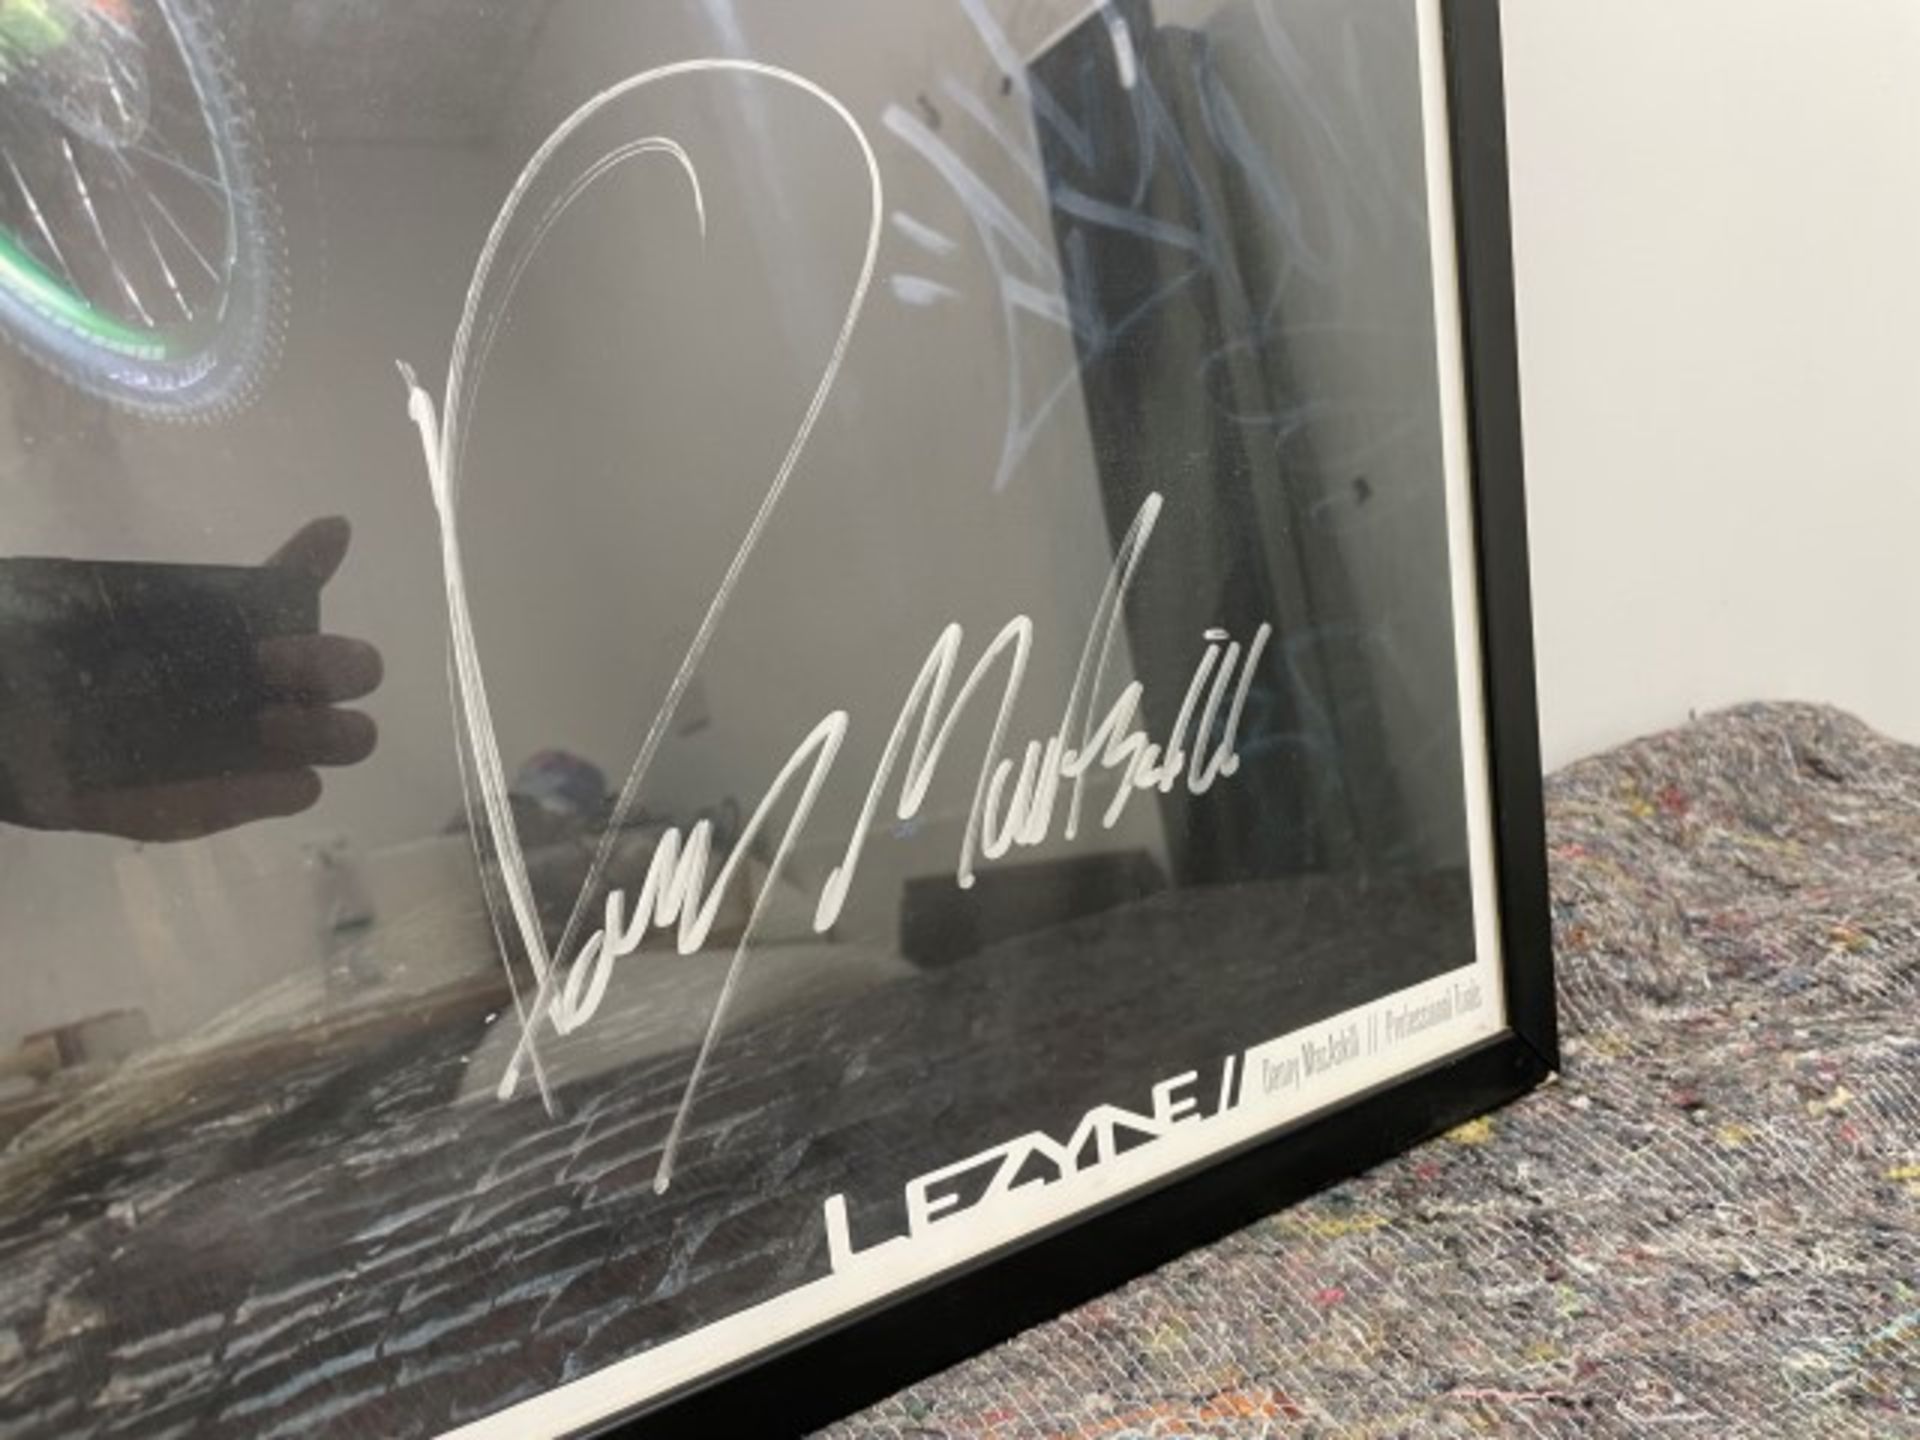 Danny MacAskill Trial Rider & Framed Signed Print - Image 2 of 2